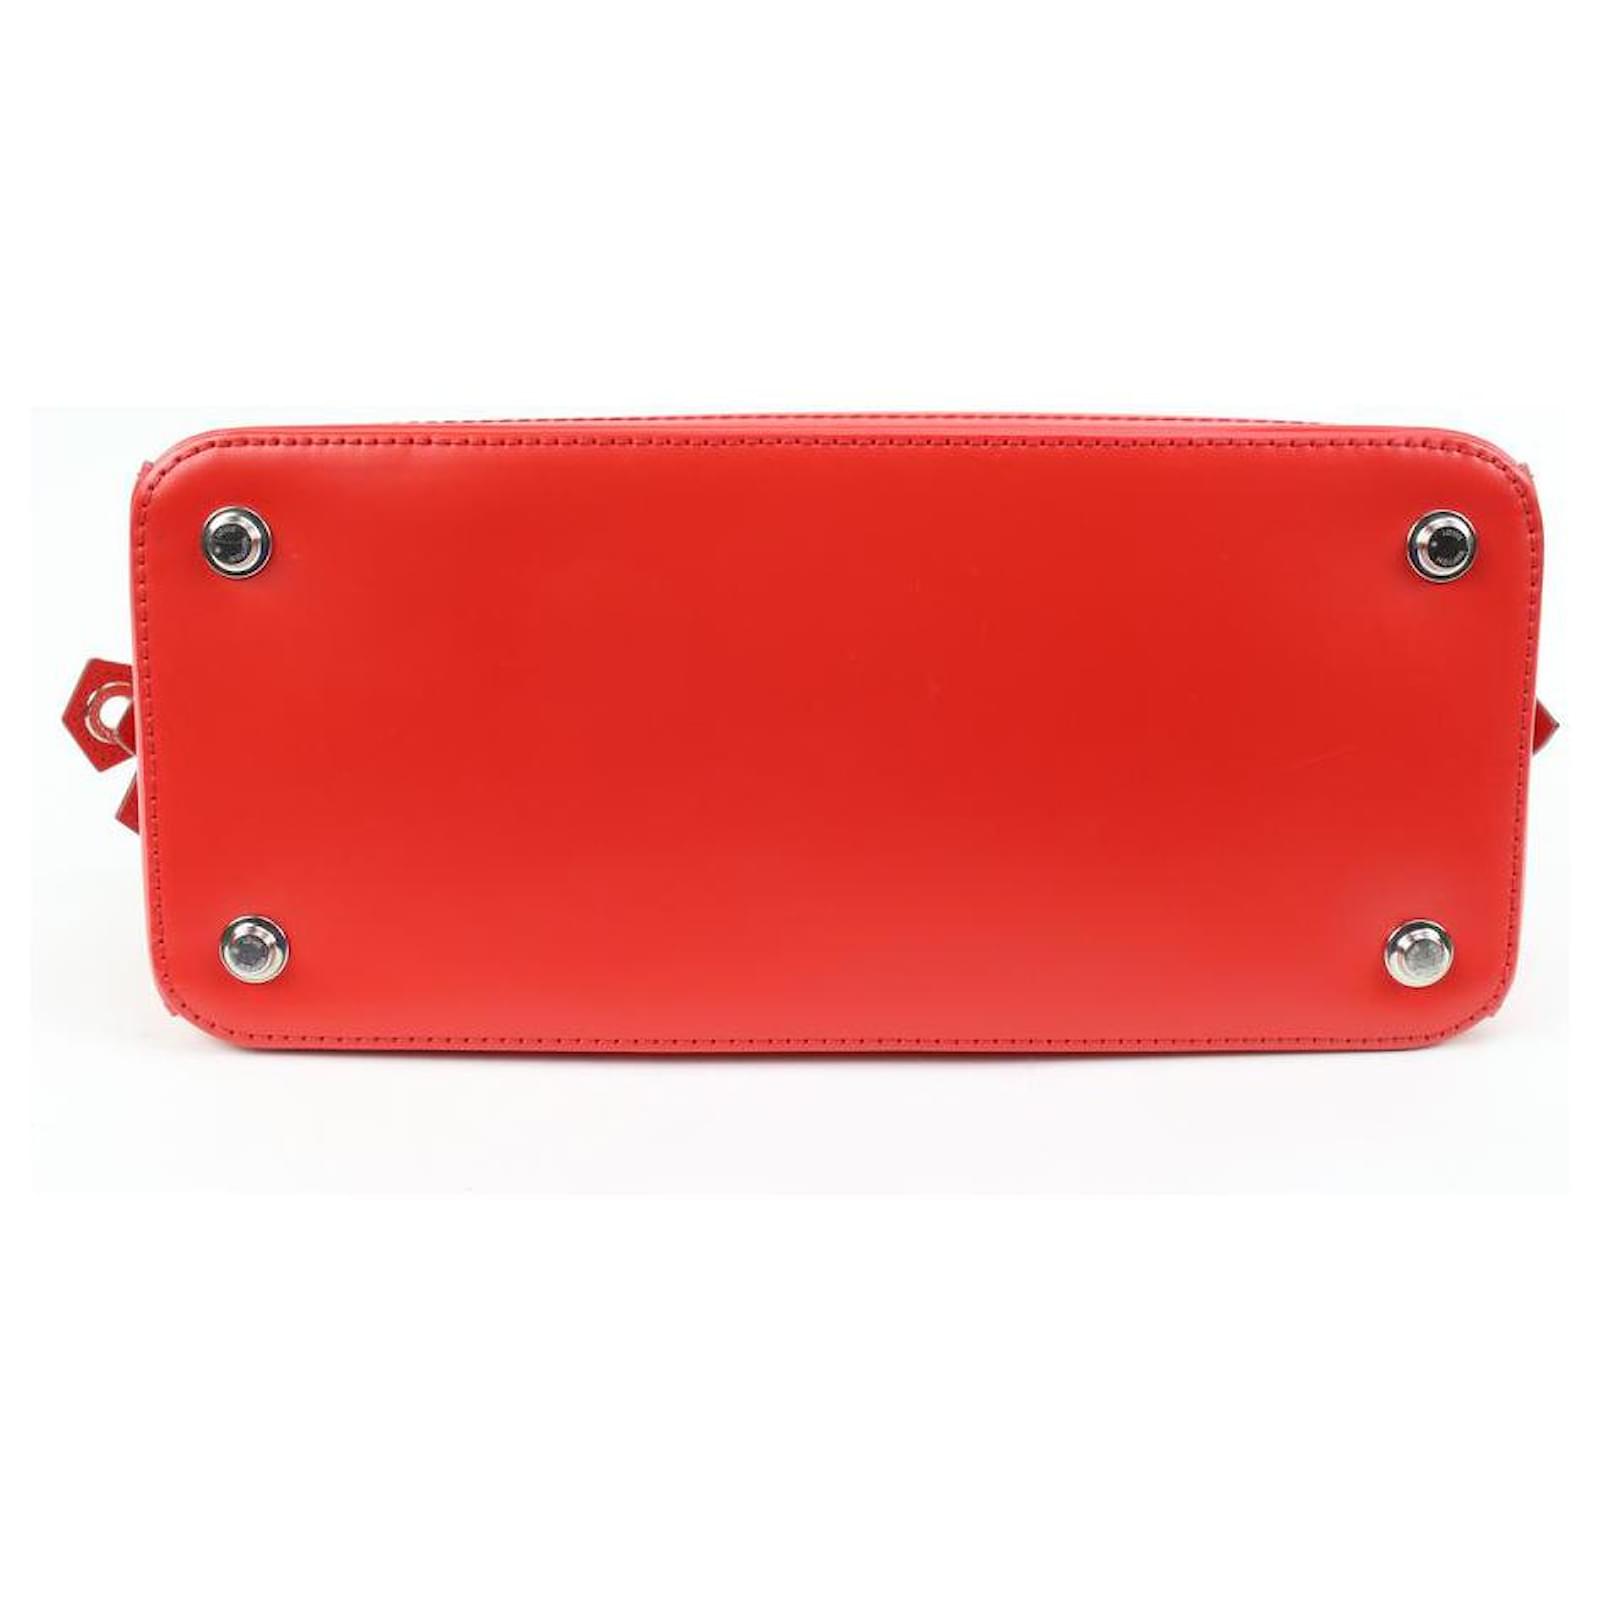 Louis Vuitton Red Monogram Dora PM Dome 2way Satchel Bag 10lk516s